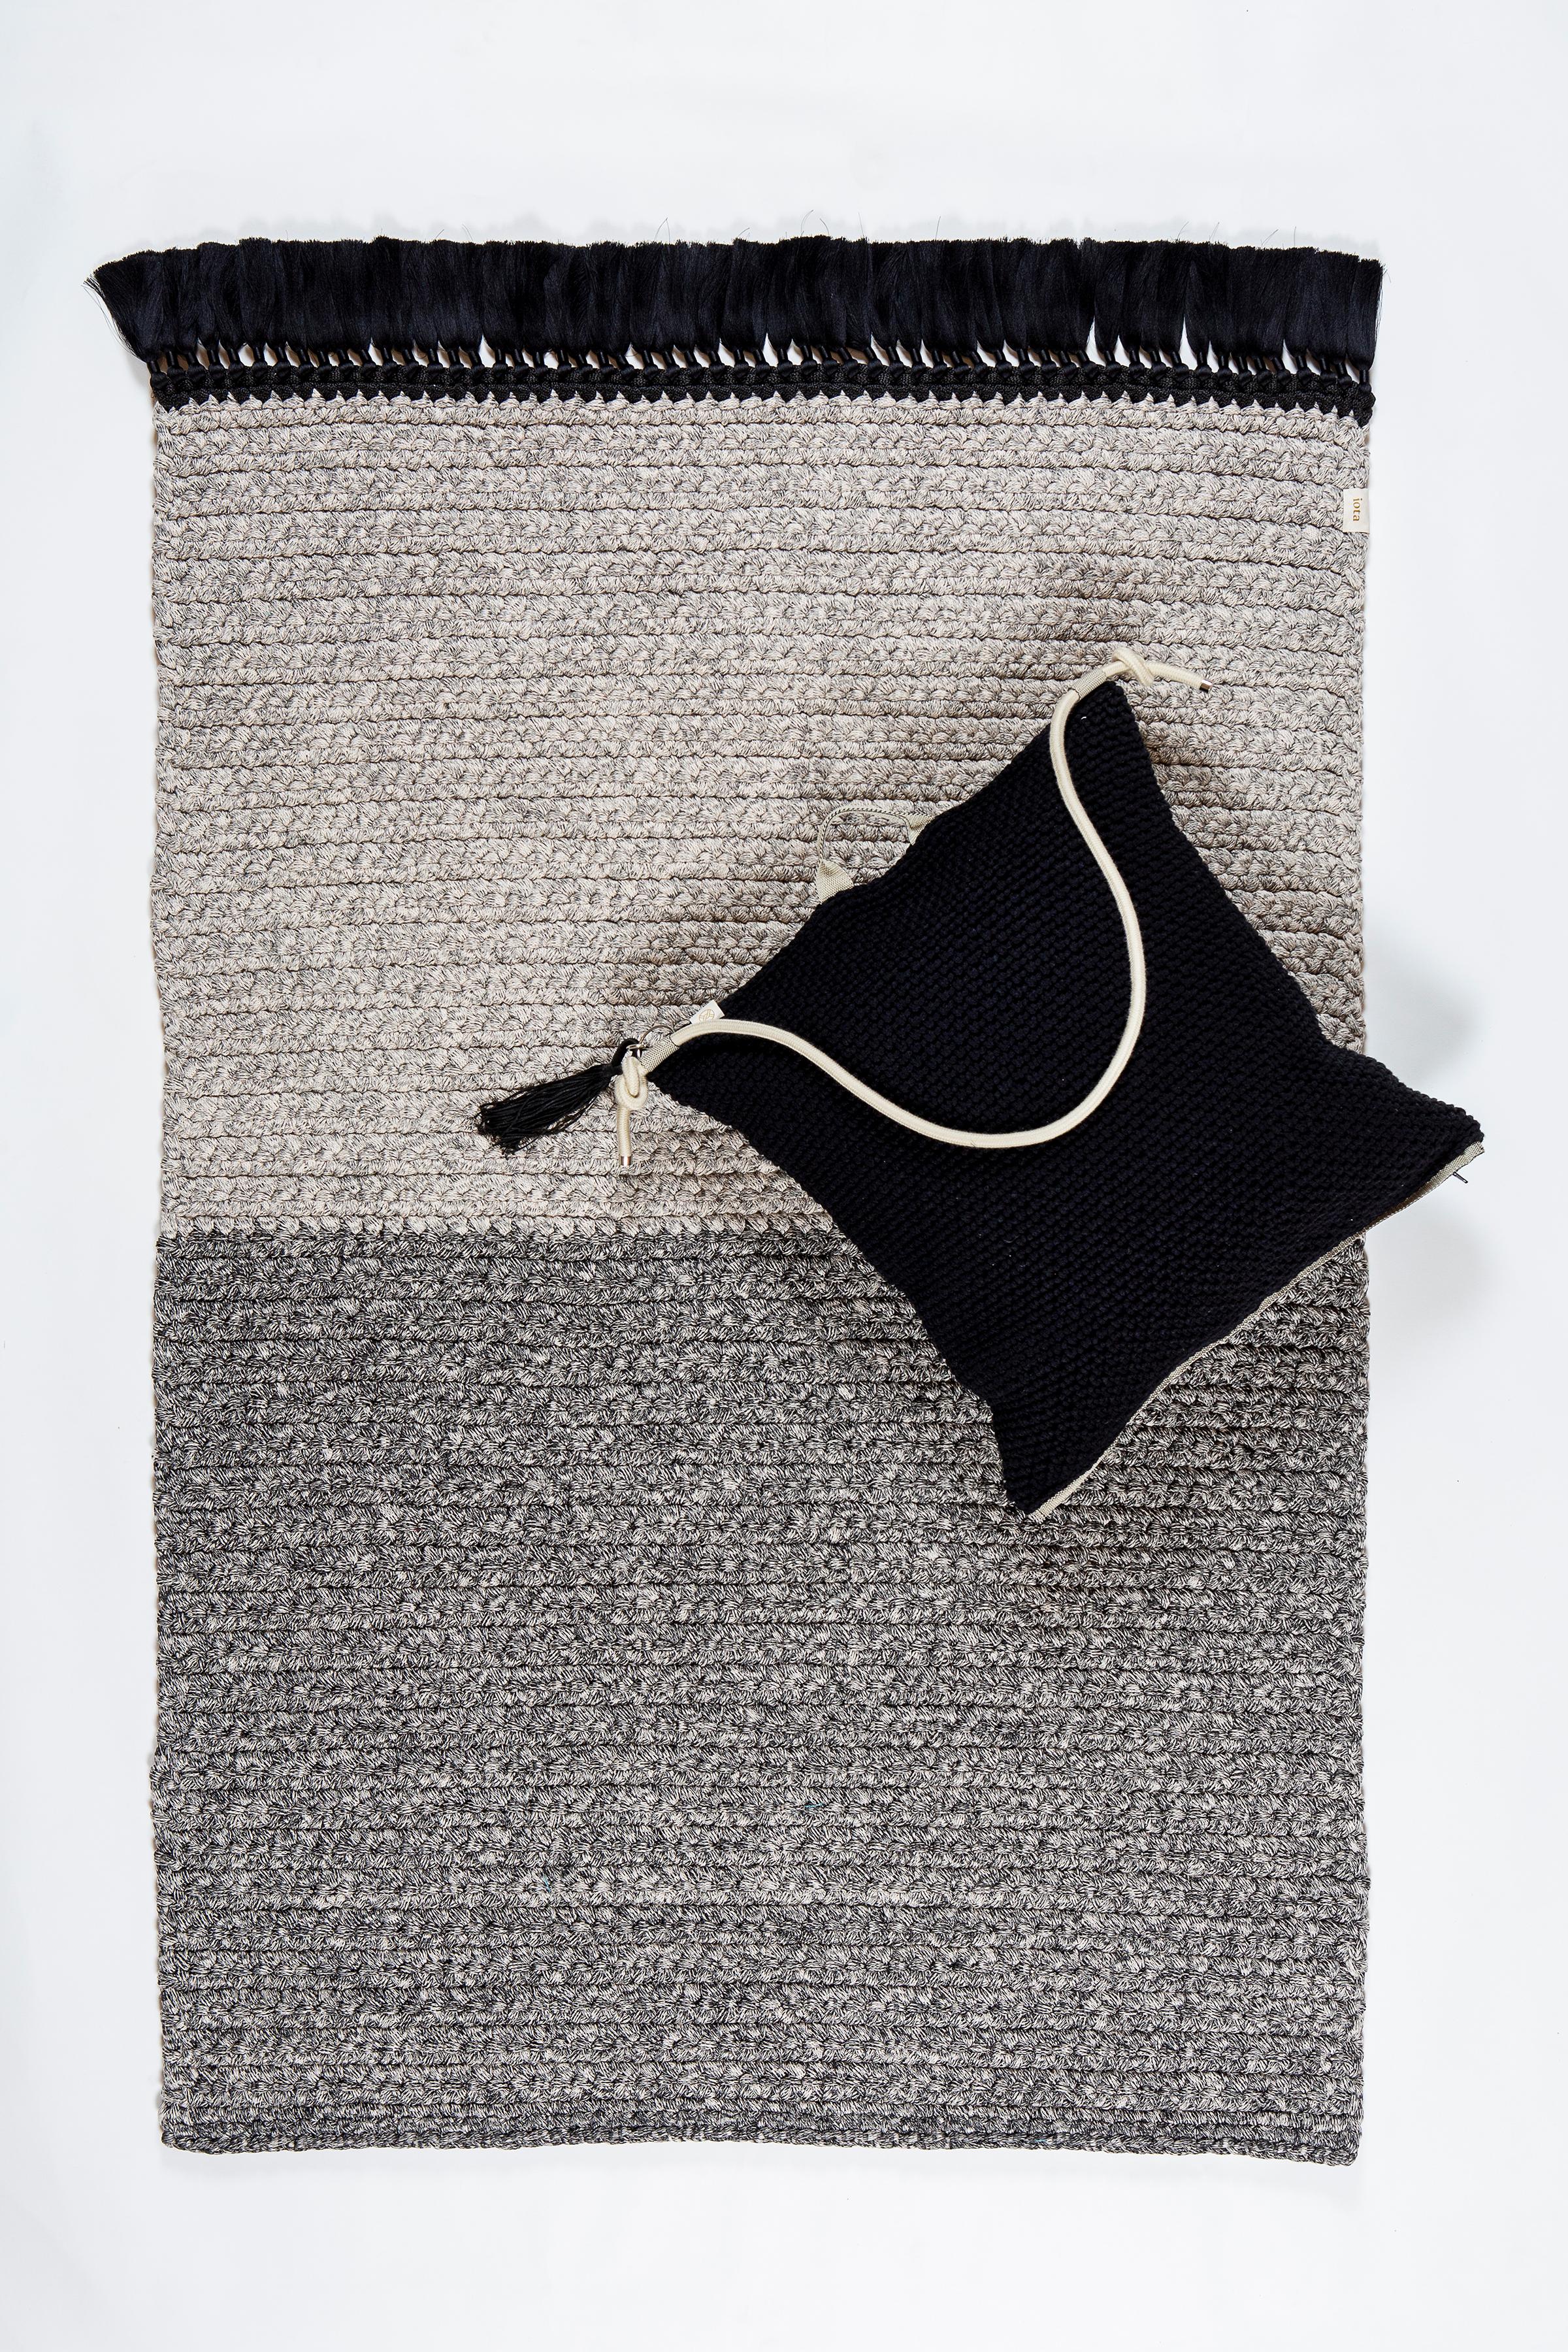 Handmade Crochet Two-Tone Rug in Black Made of iota's Bespoke Yarns For Sale 4